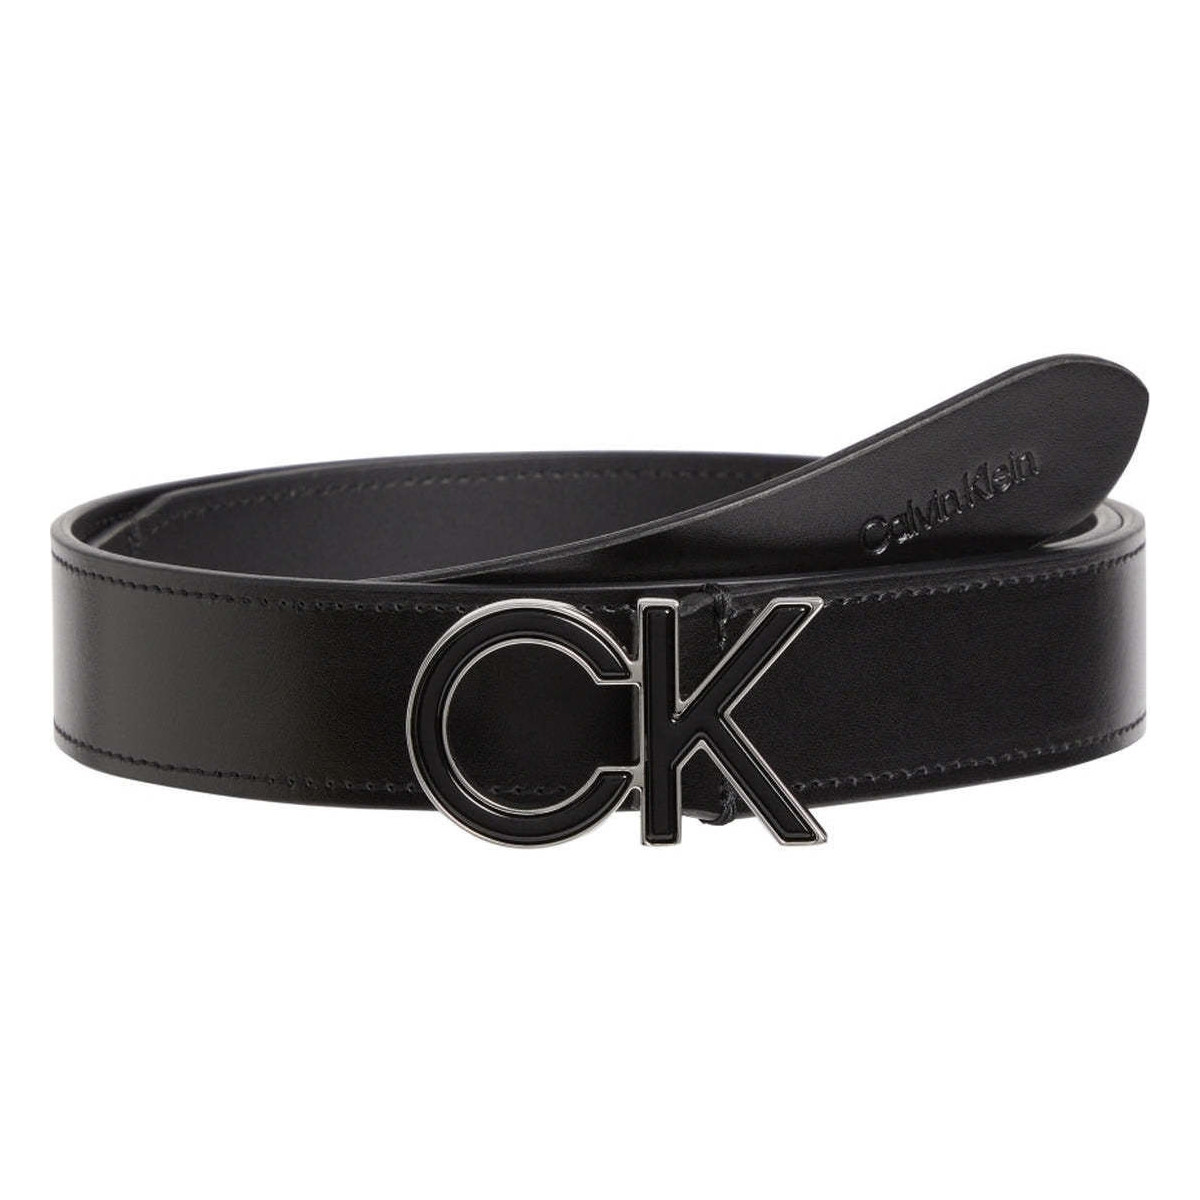 Accessoires textile Femme Calvin Klein Unisex Καπέλο re-lock inlay logo belt 30mm Noir